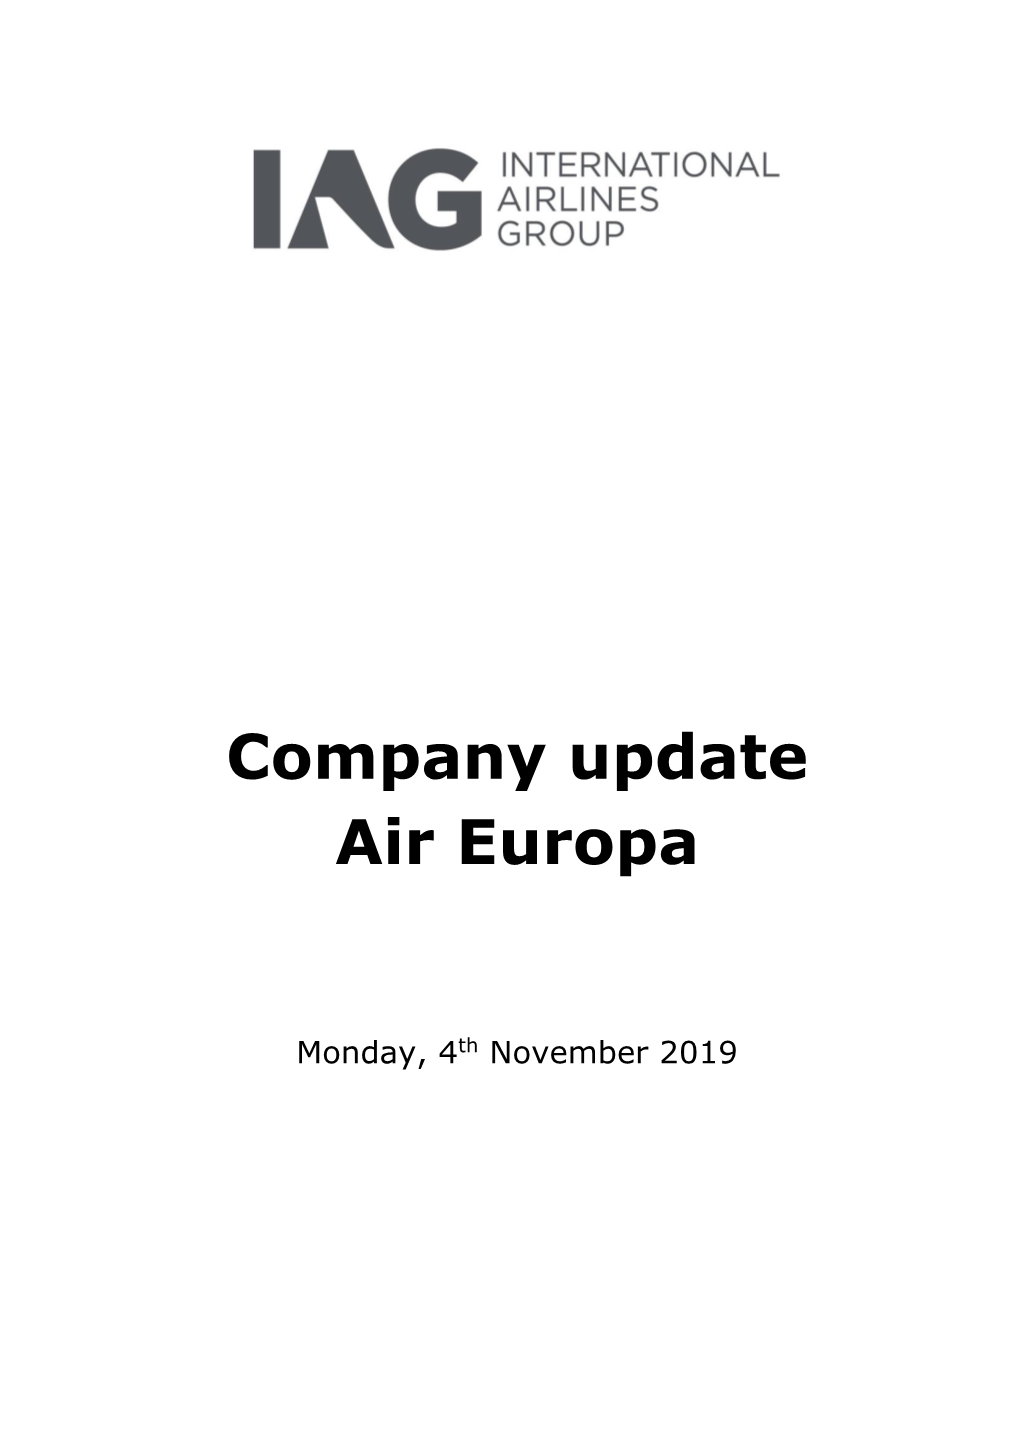 Company Update Air Europa